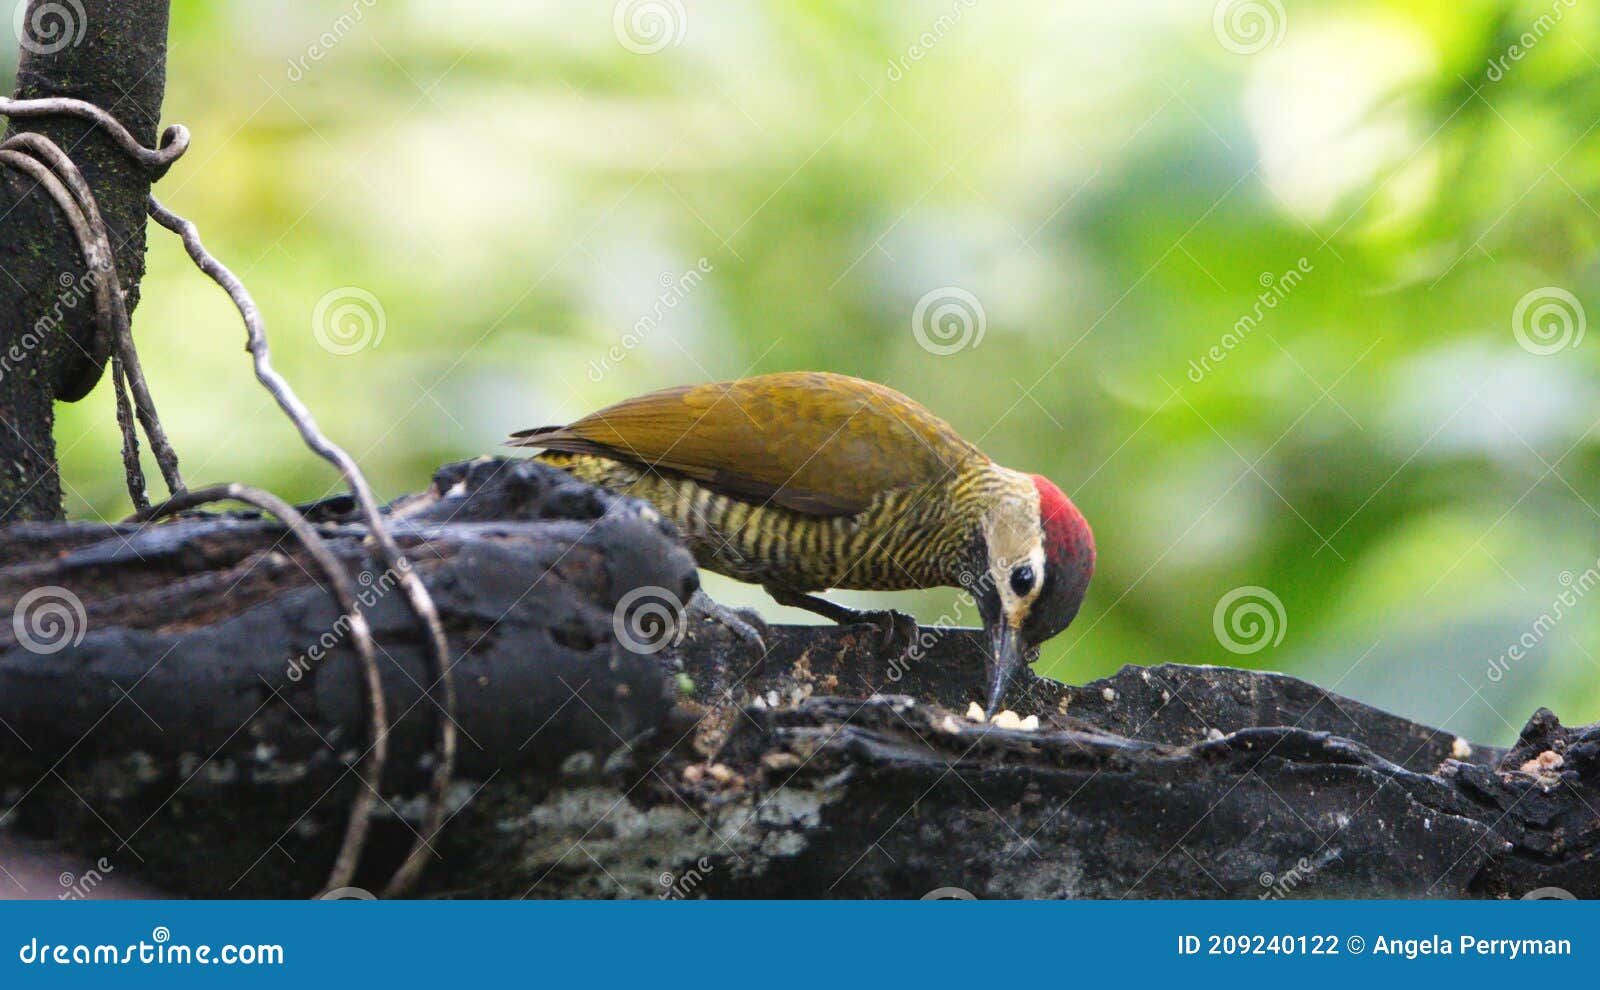 golden-olive woodpecker